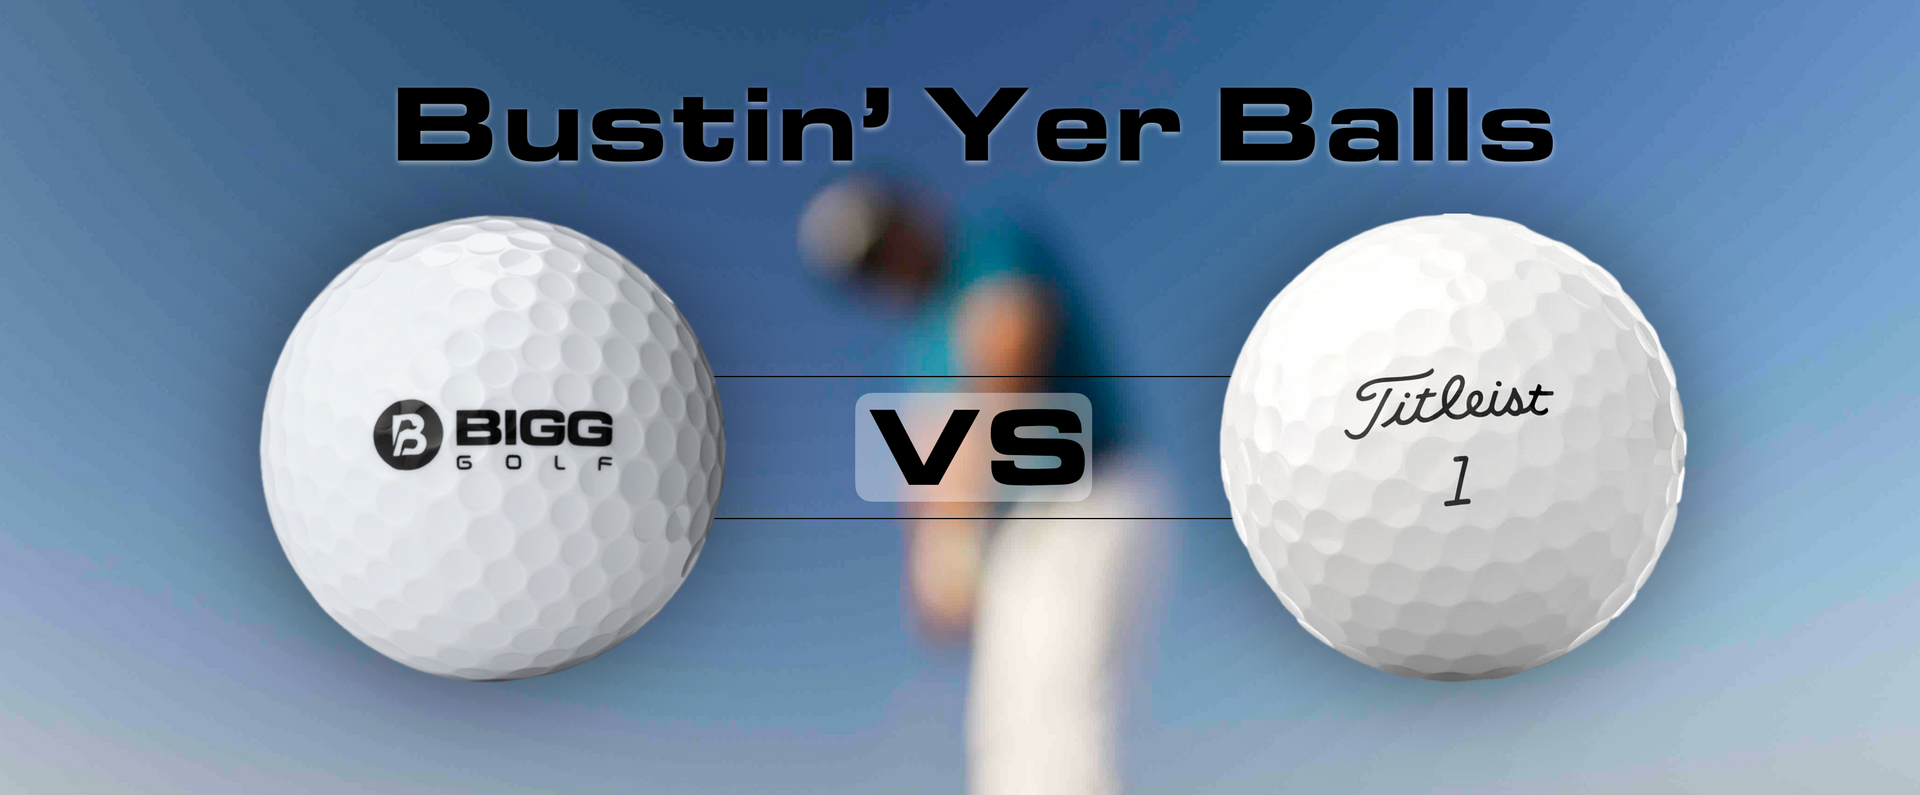 Bustin' Your BALLS - Bigg Golf Score Crusher vs. Titleist ProV1